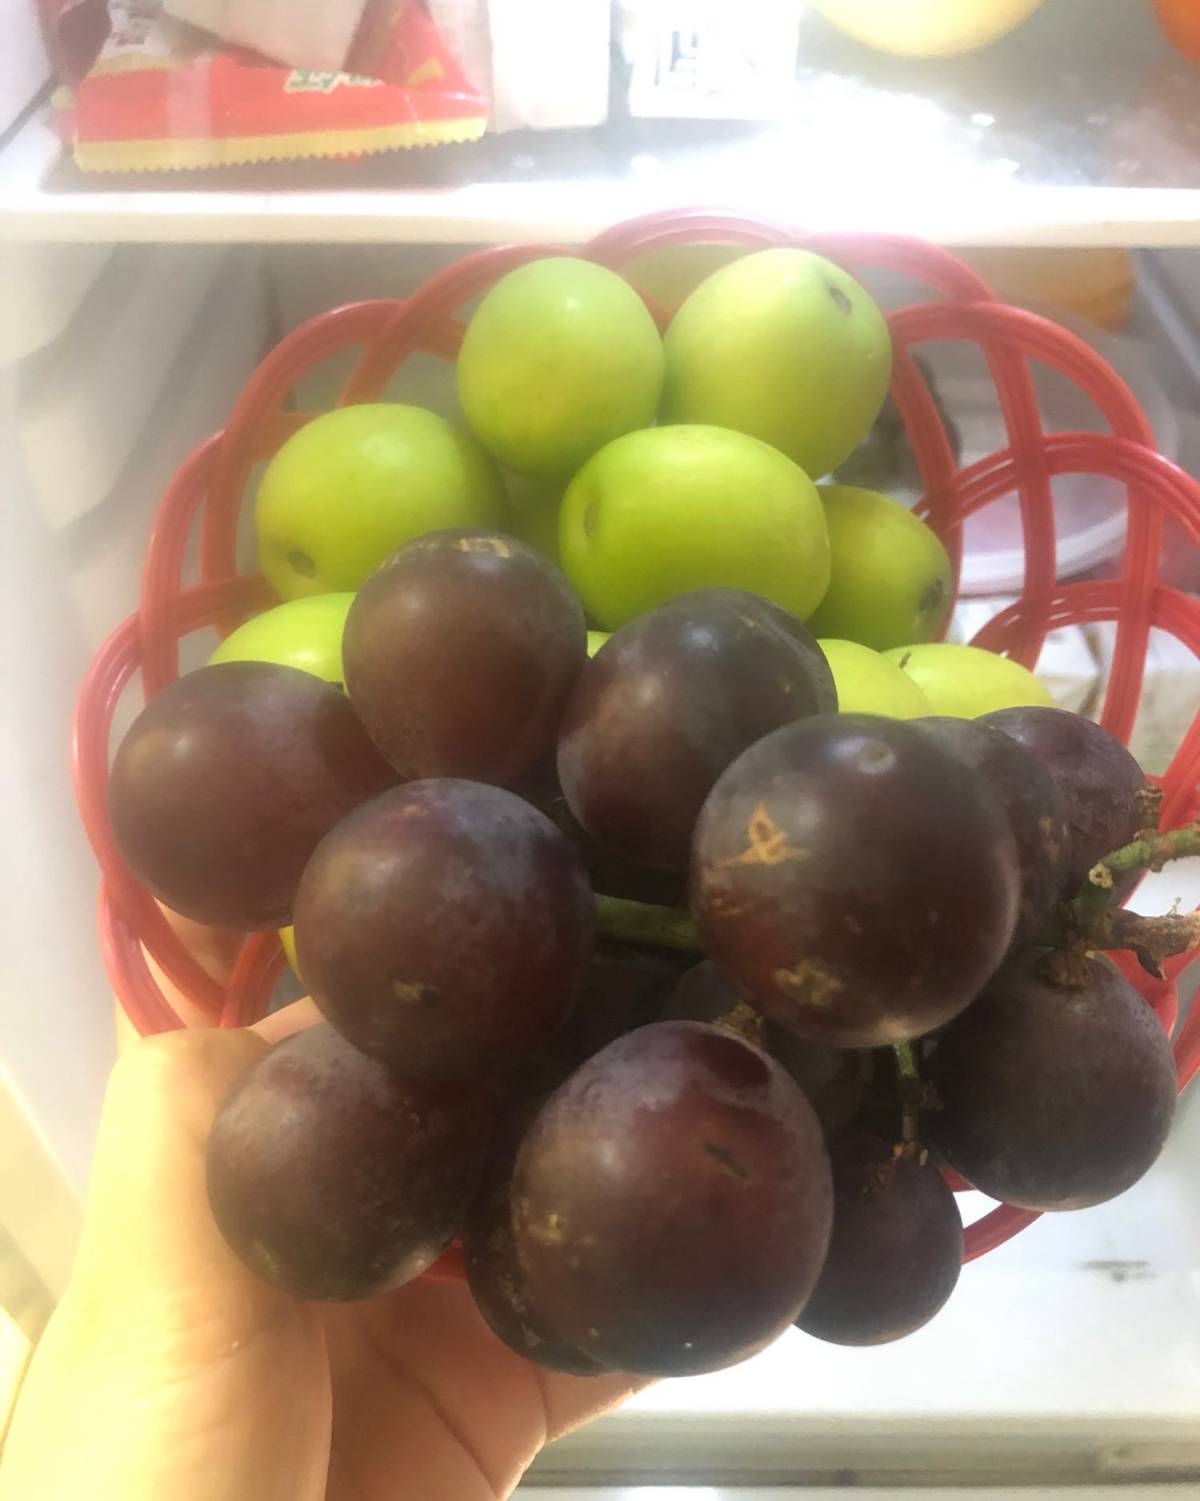 Day12  今天去买了水果，买了石榴，冬枣，葡萄，火龙果，